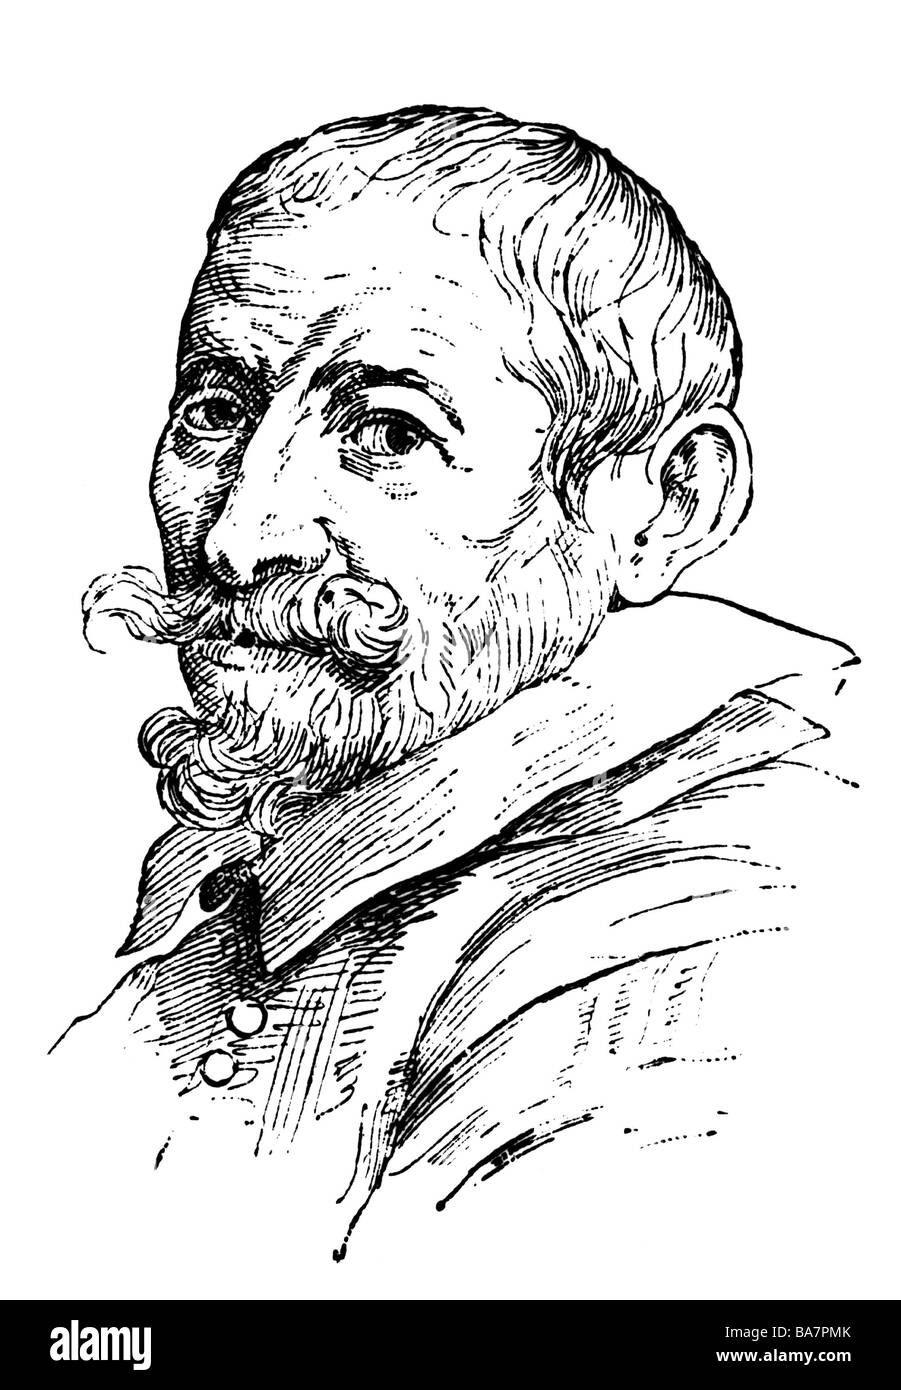 Momper, Jodocus (Joost, Josse) de, 1564 - 1635, Dutch artist (painter), portrait, later drawing after contemporary painting, , Stock Photo